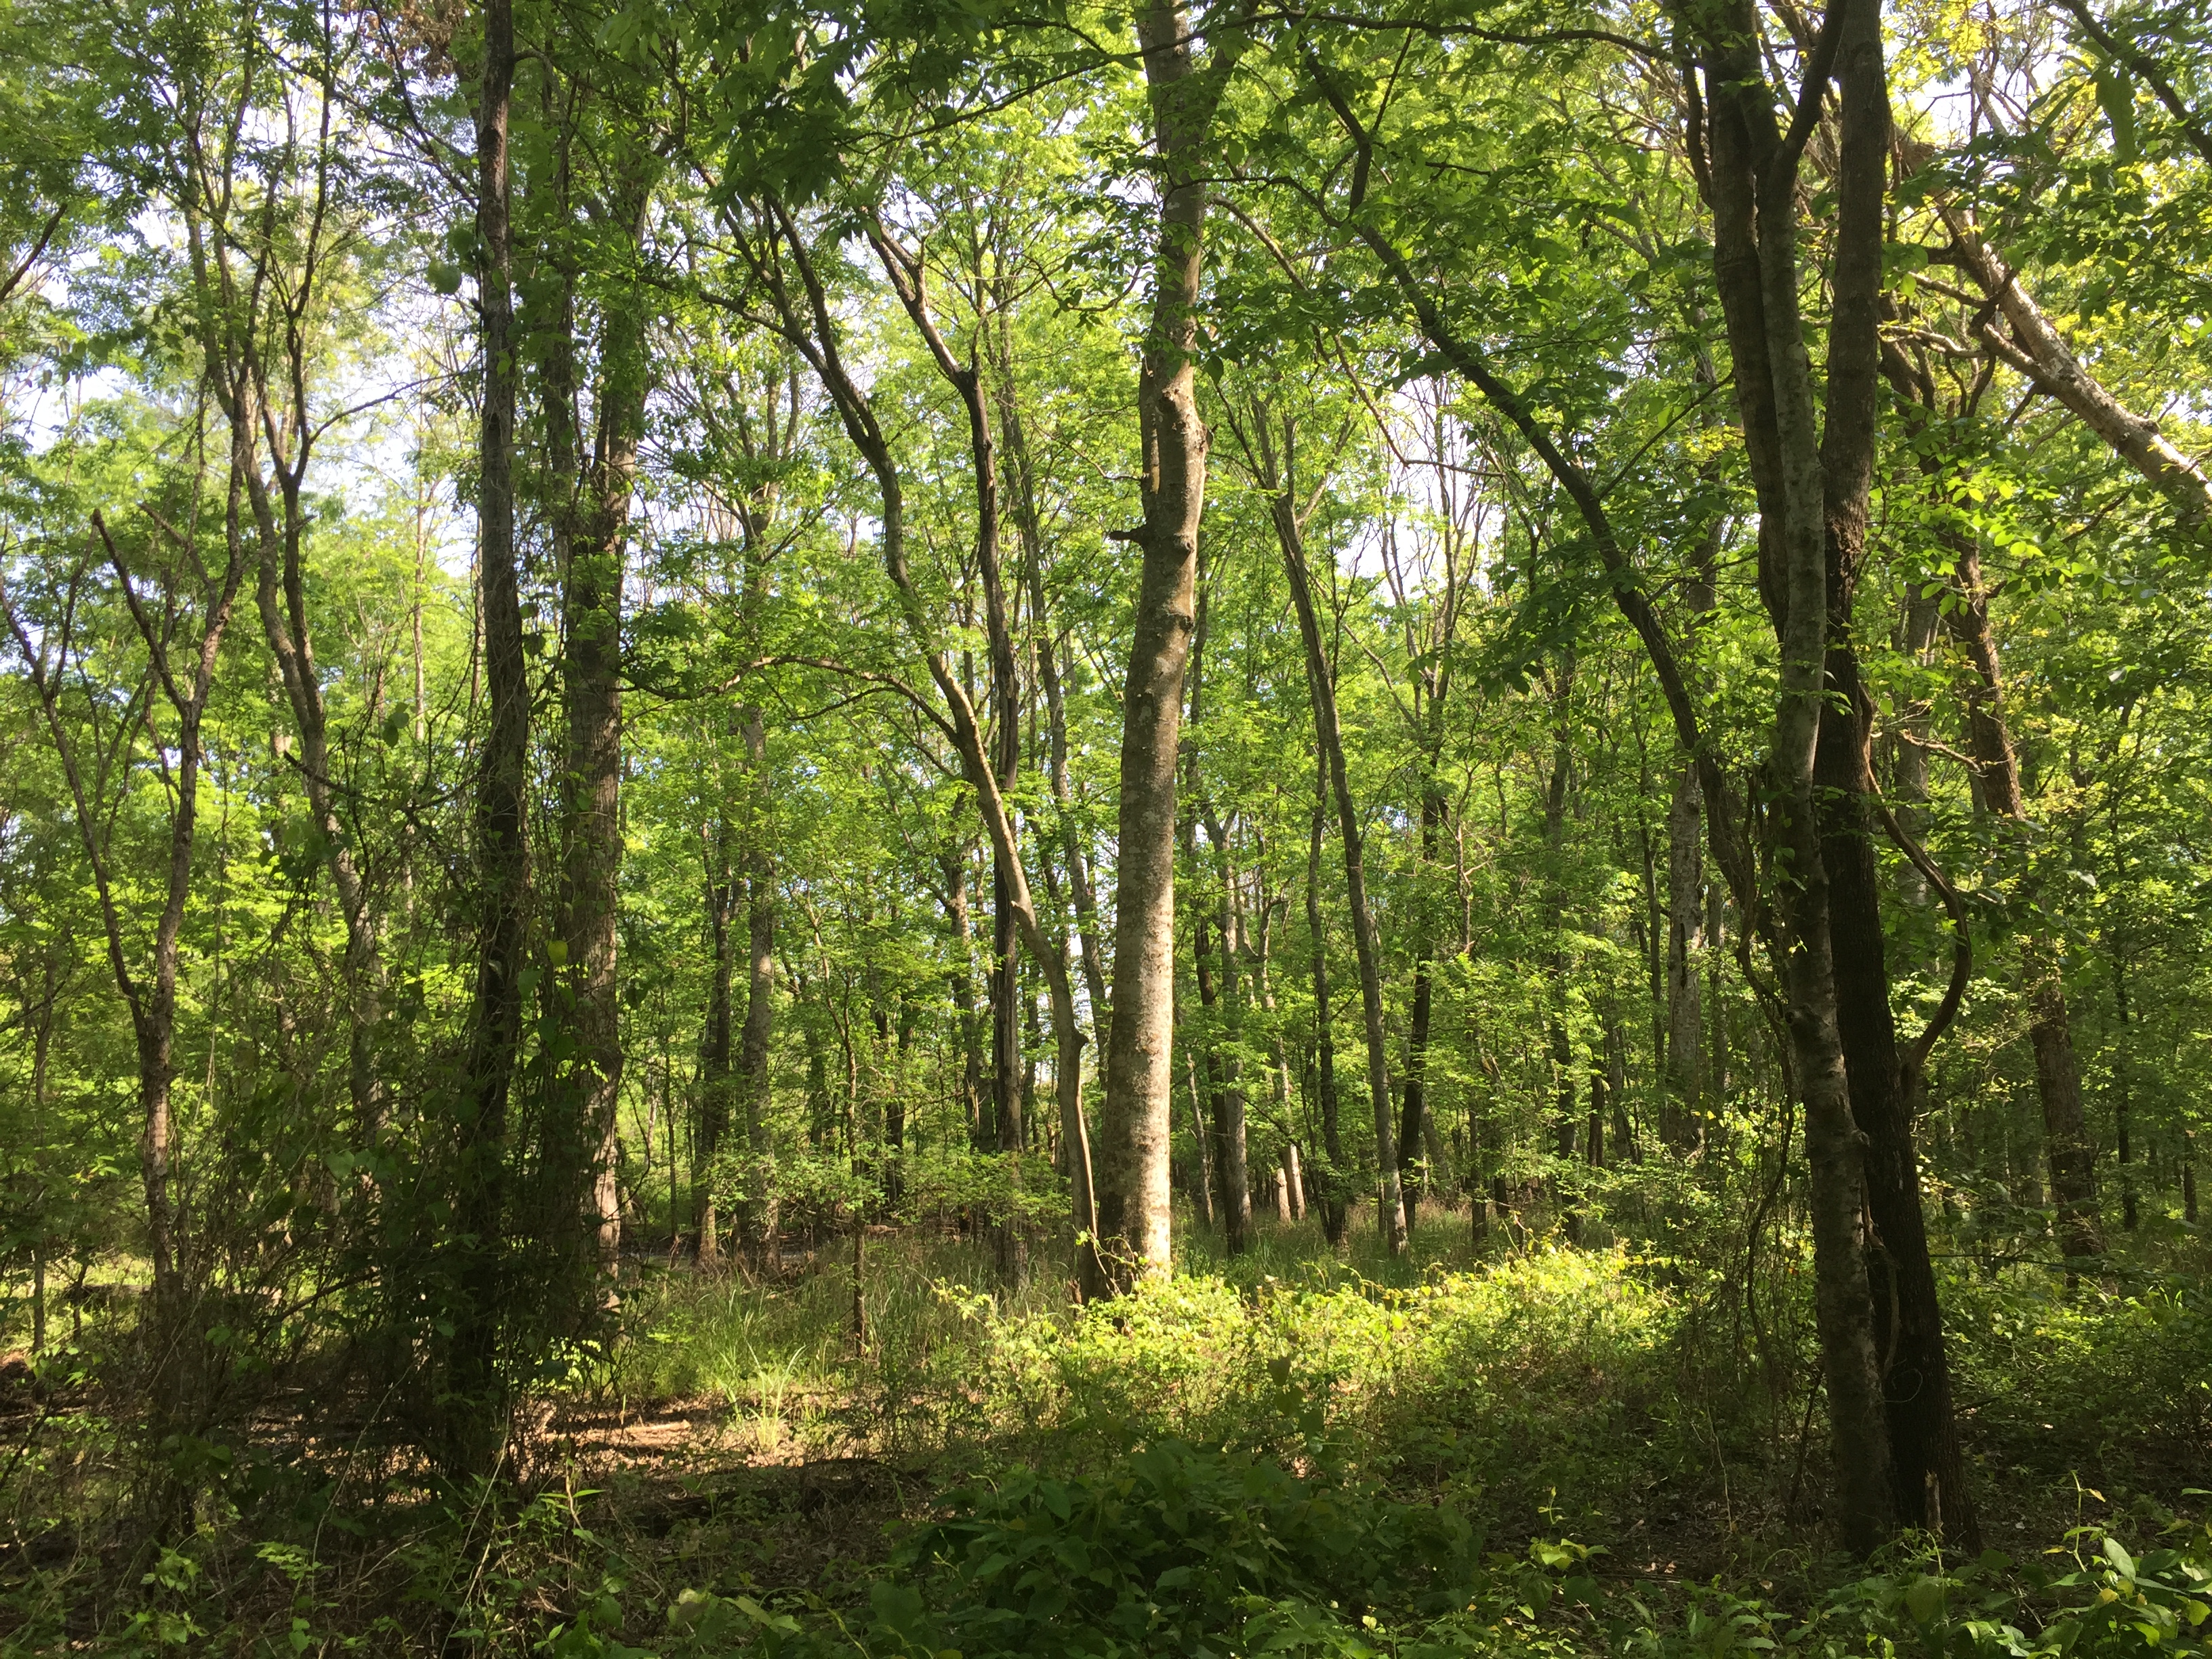 A lush green bottomland hardwood forest.